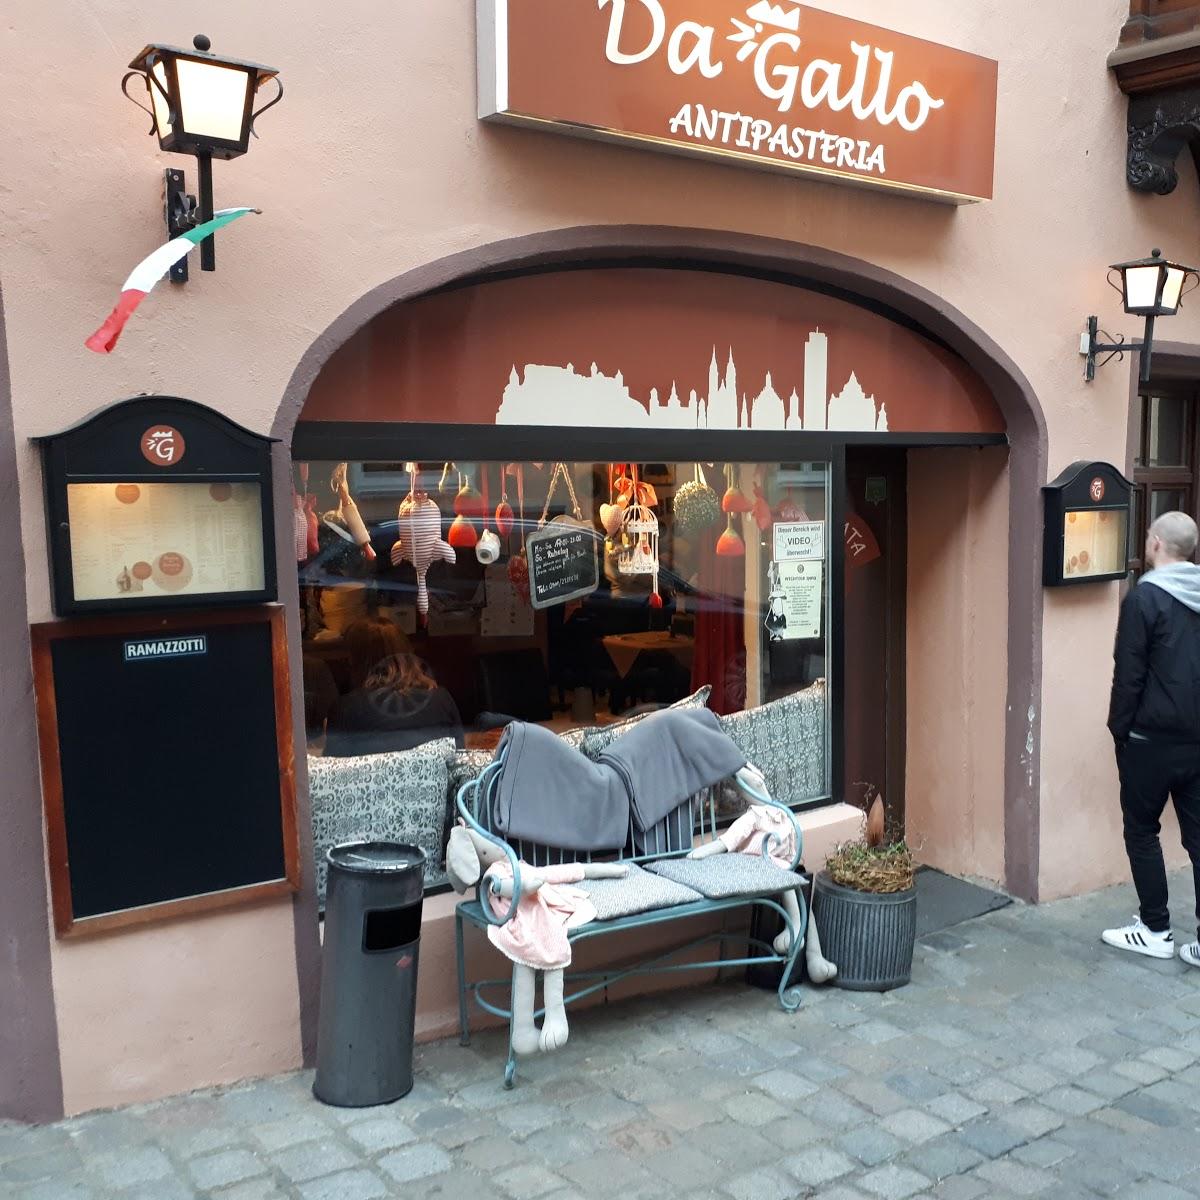 Restaurant "Antipasteria da Gallo" in Nürnberg